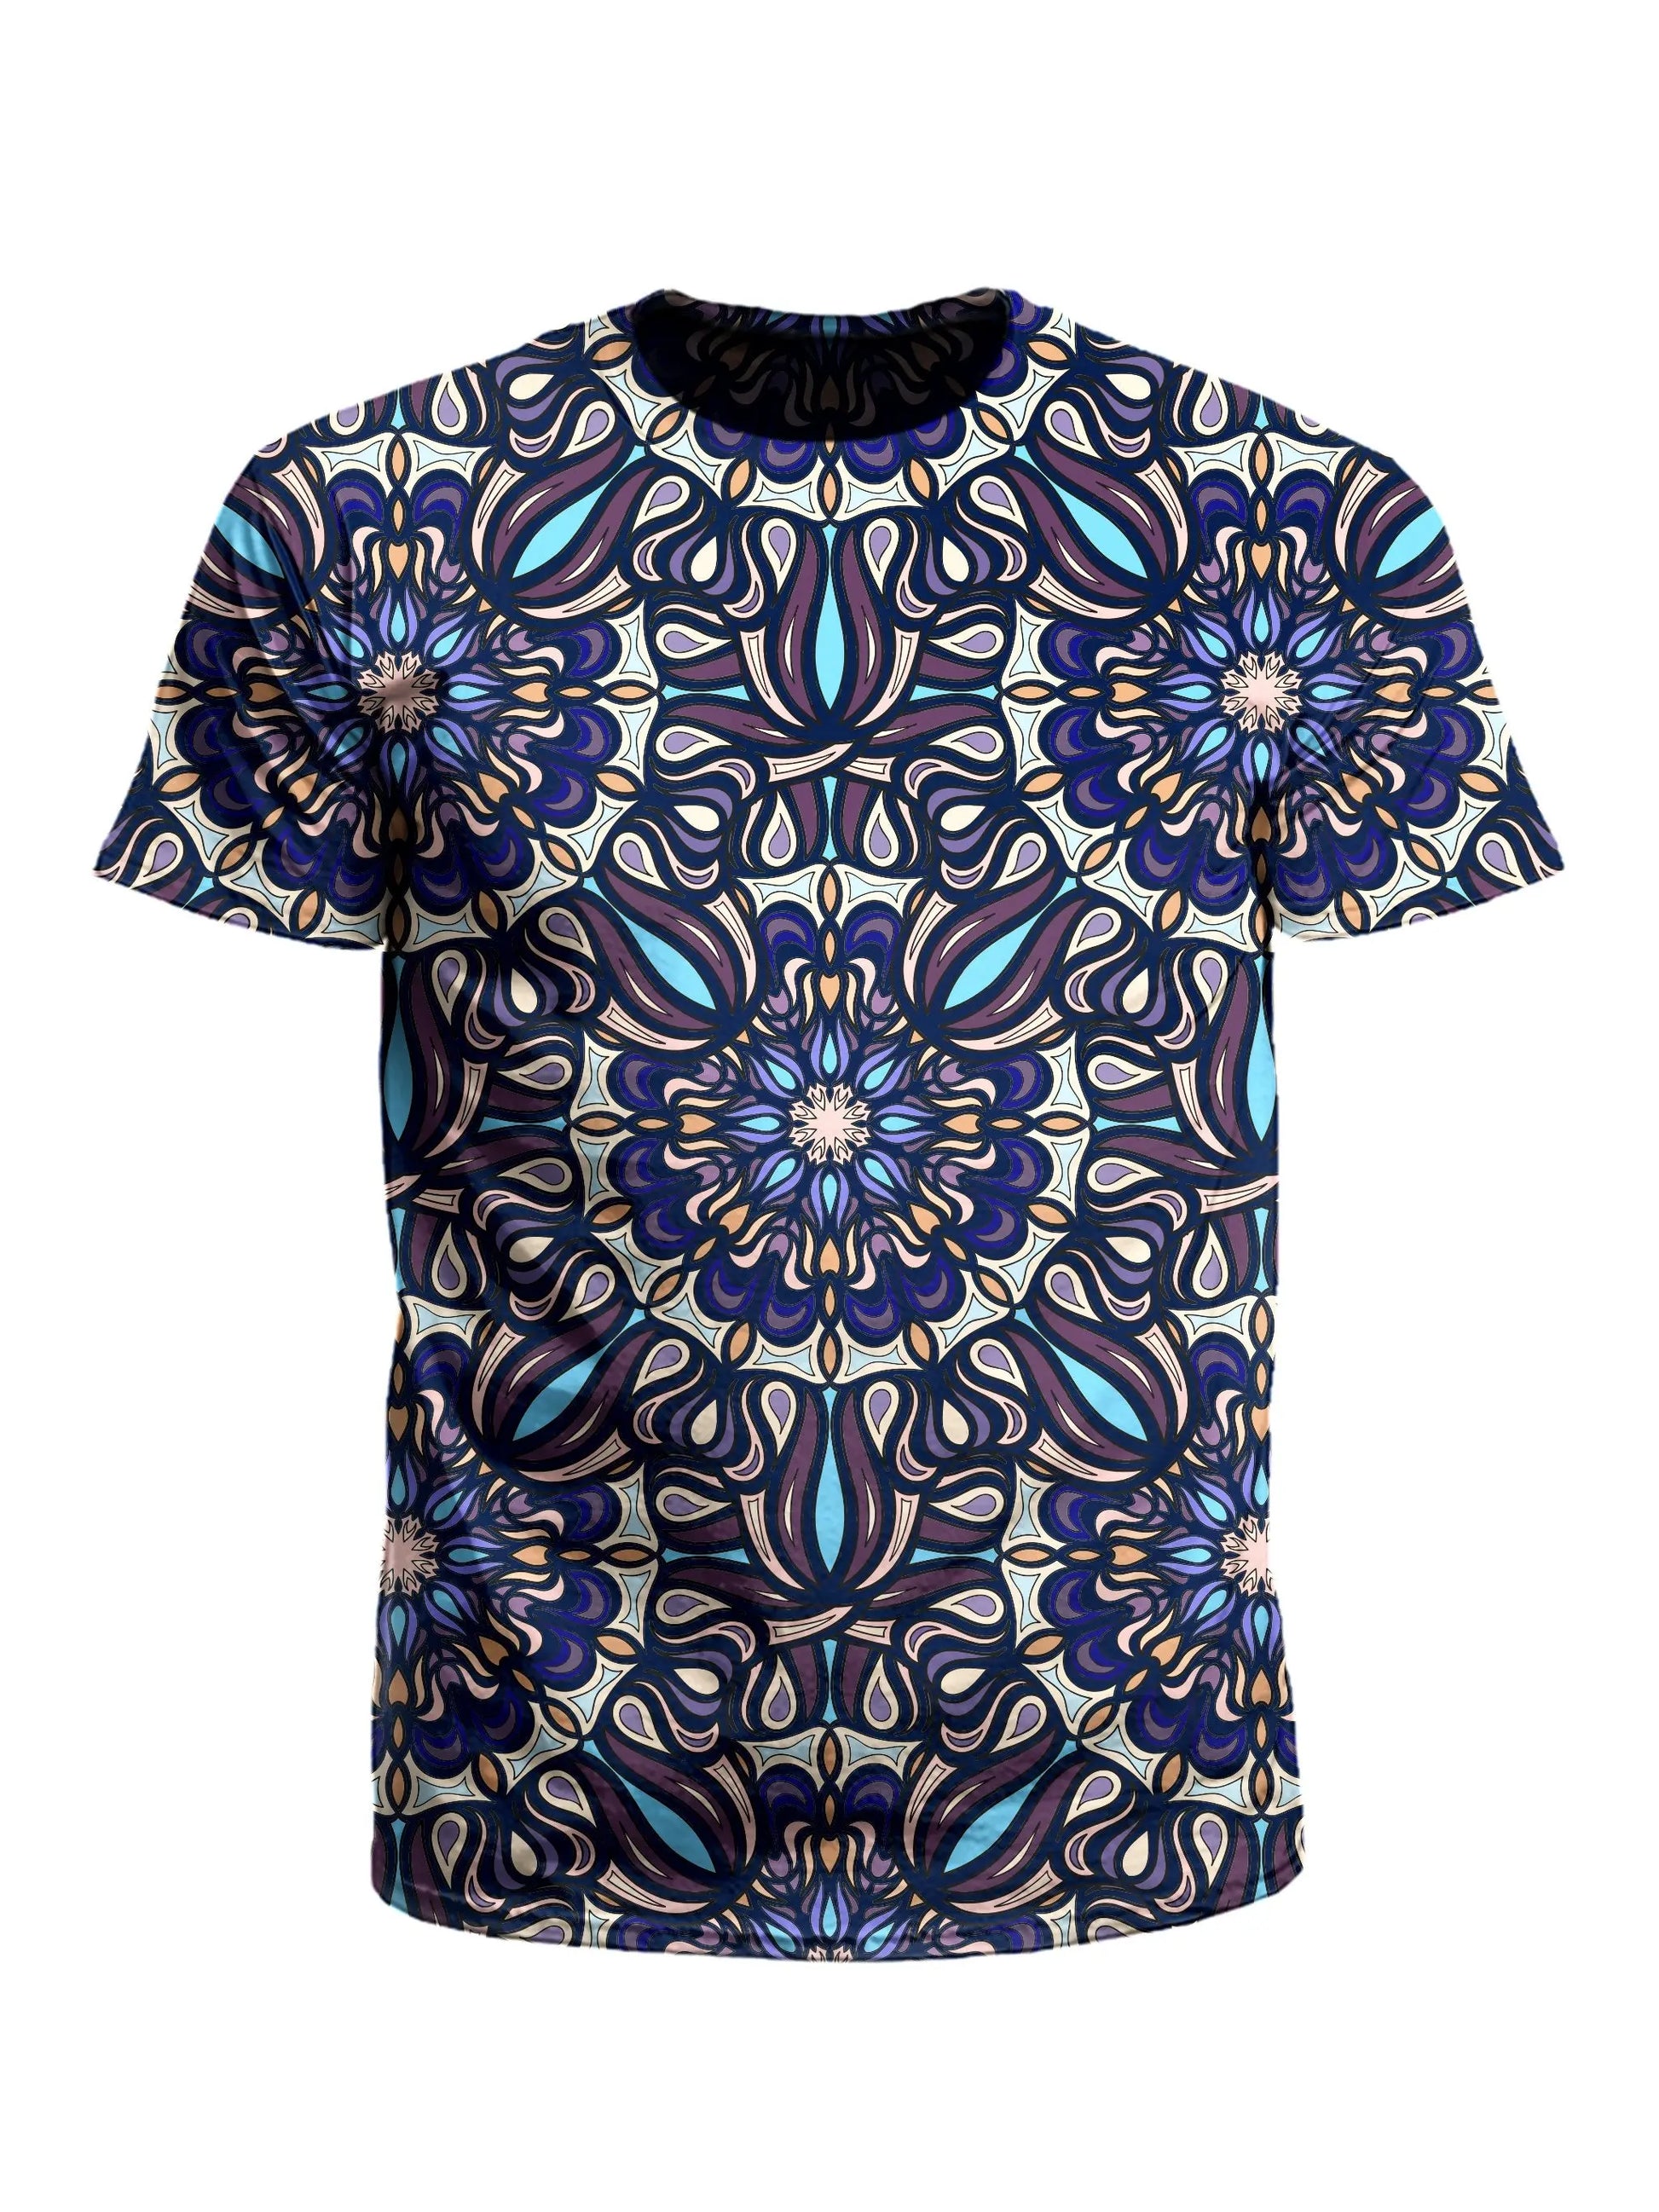 Men's blue, purple & white mandala unisex t-shirt front view.